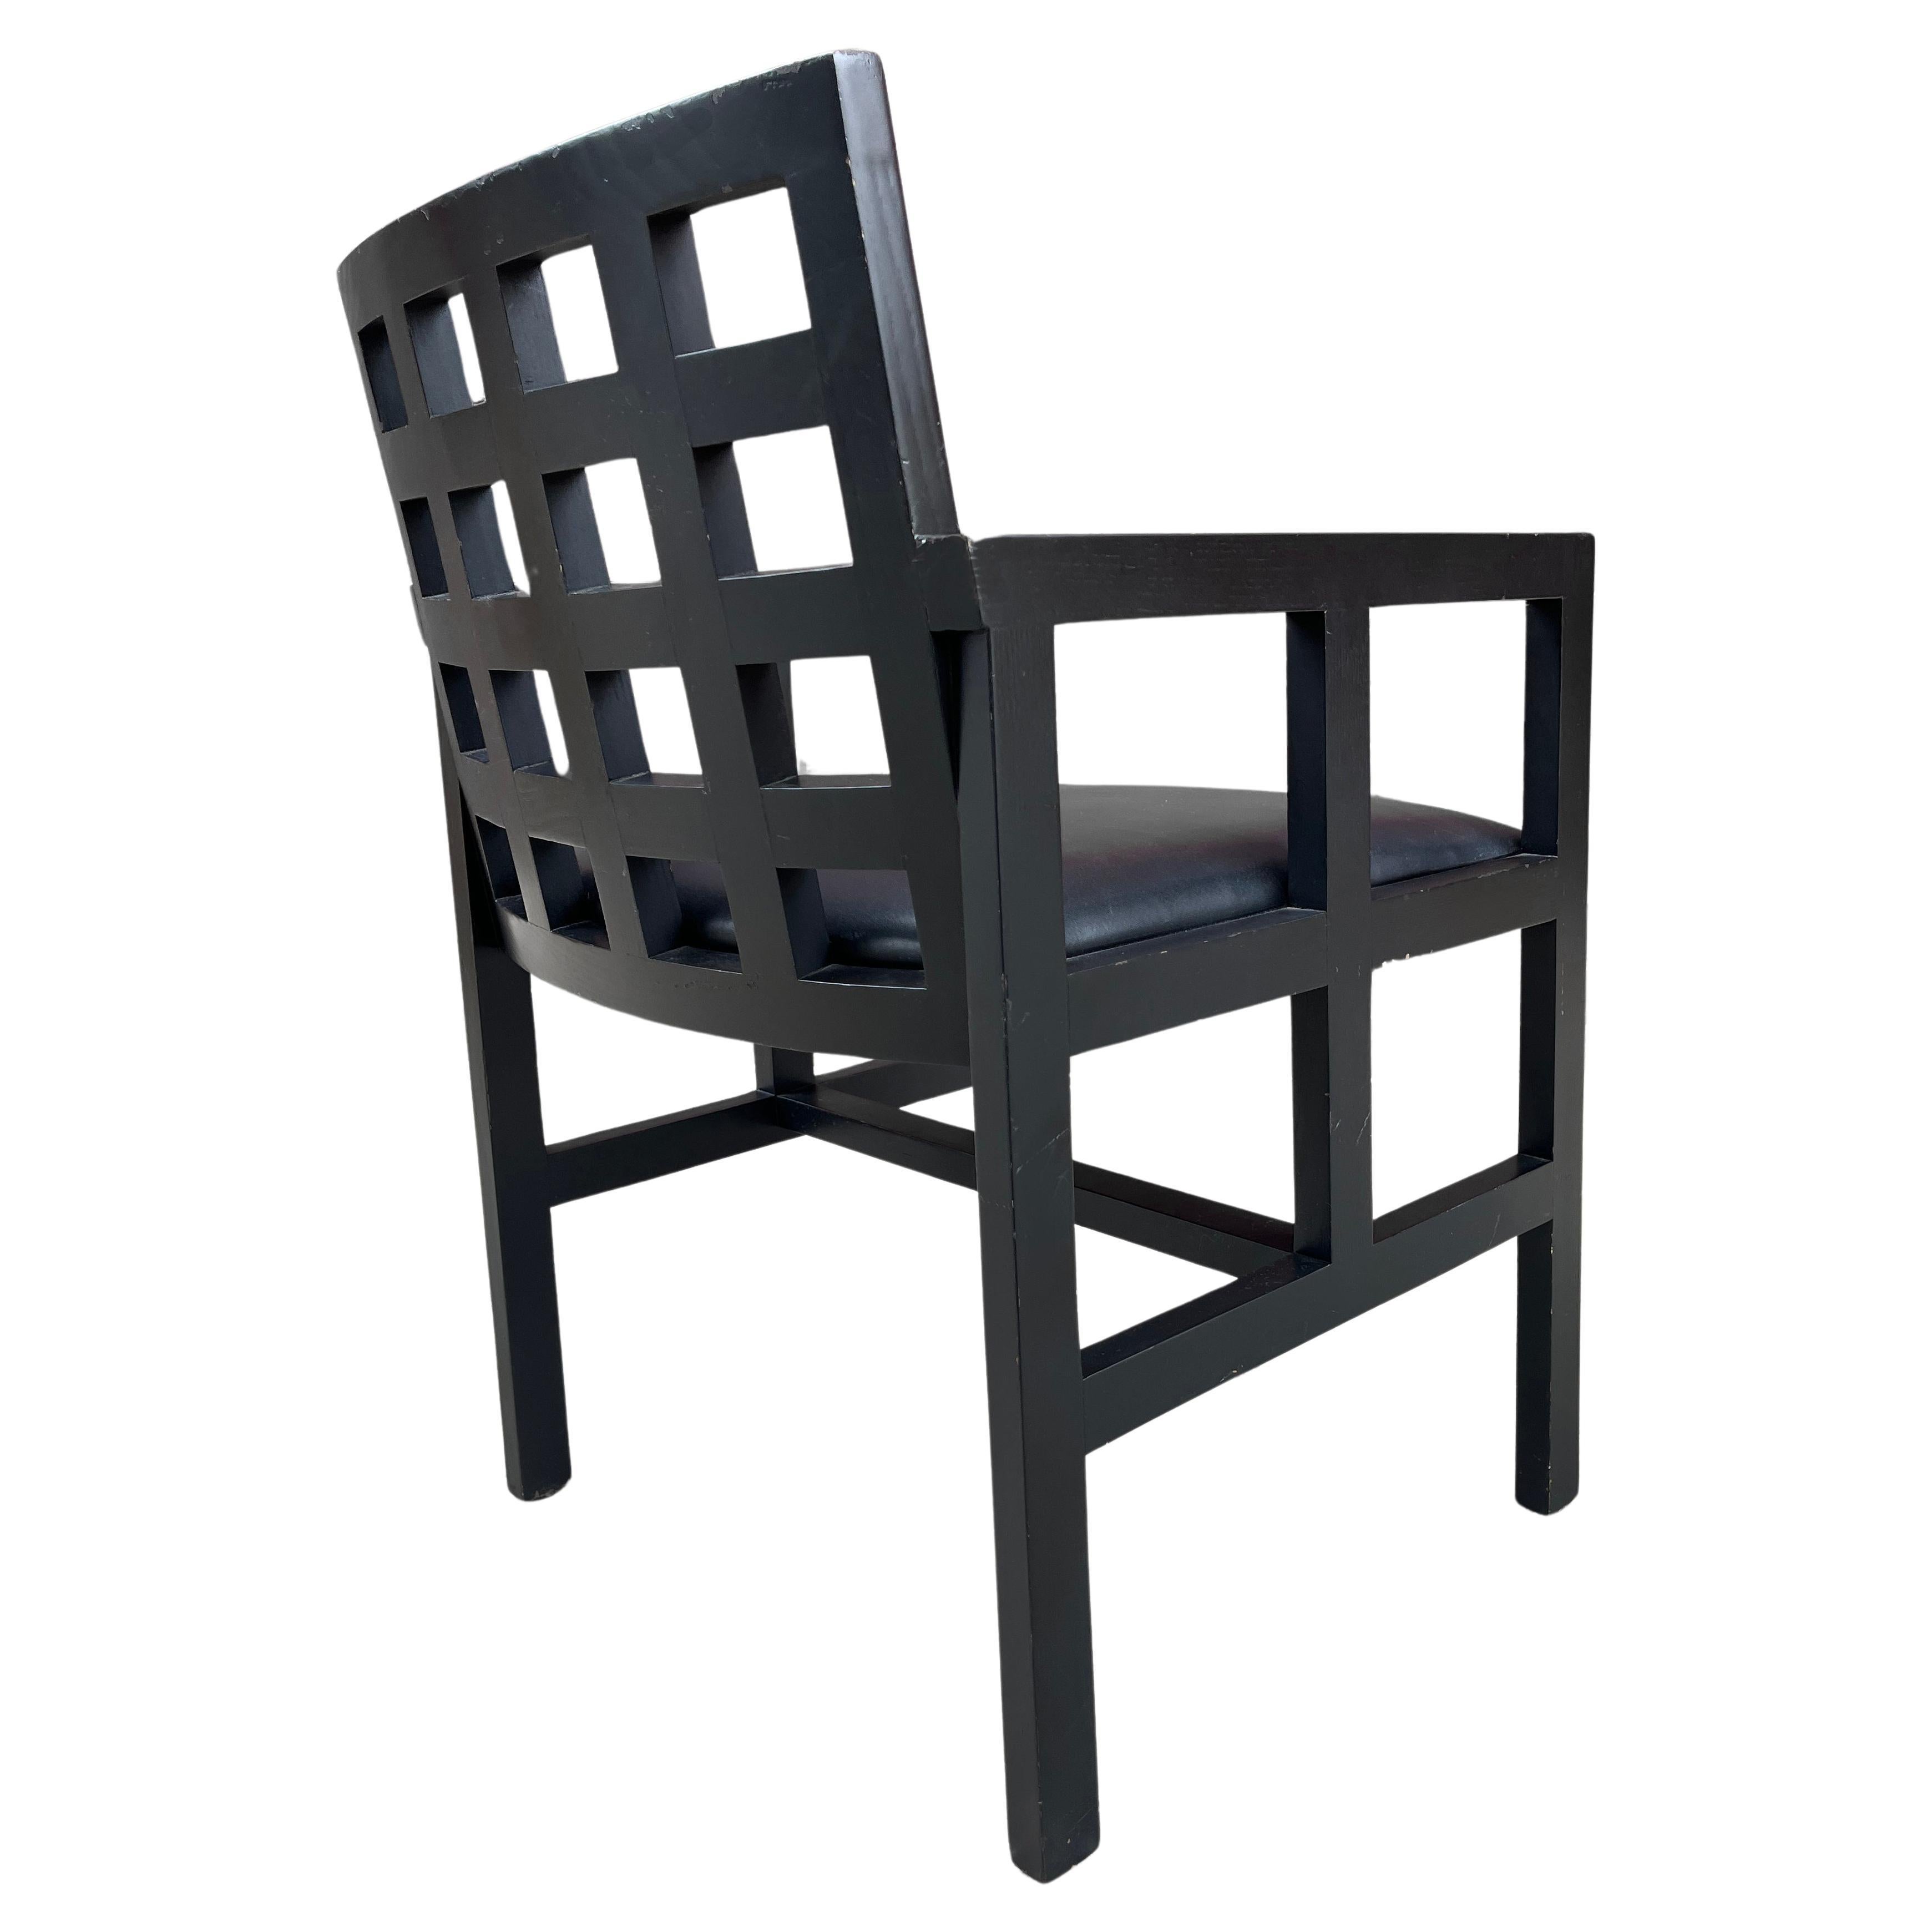 Late 20th Century Midcentury Modern Ward Bennett Model 1515 Chair For Sale